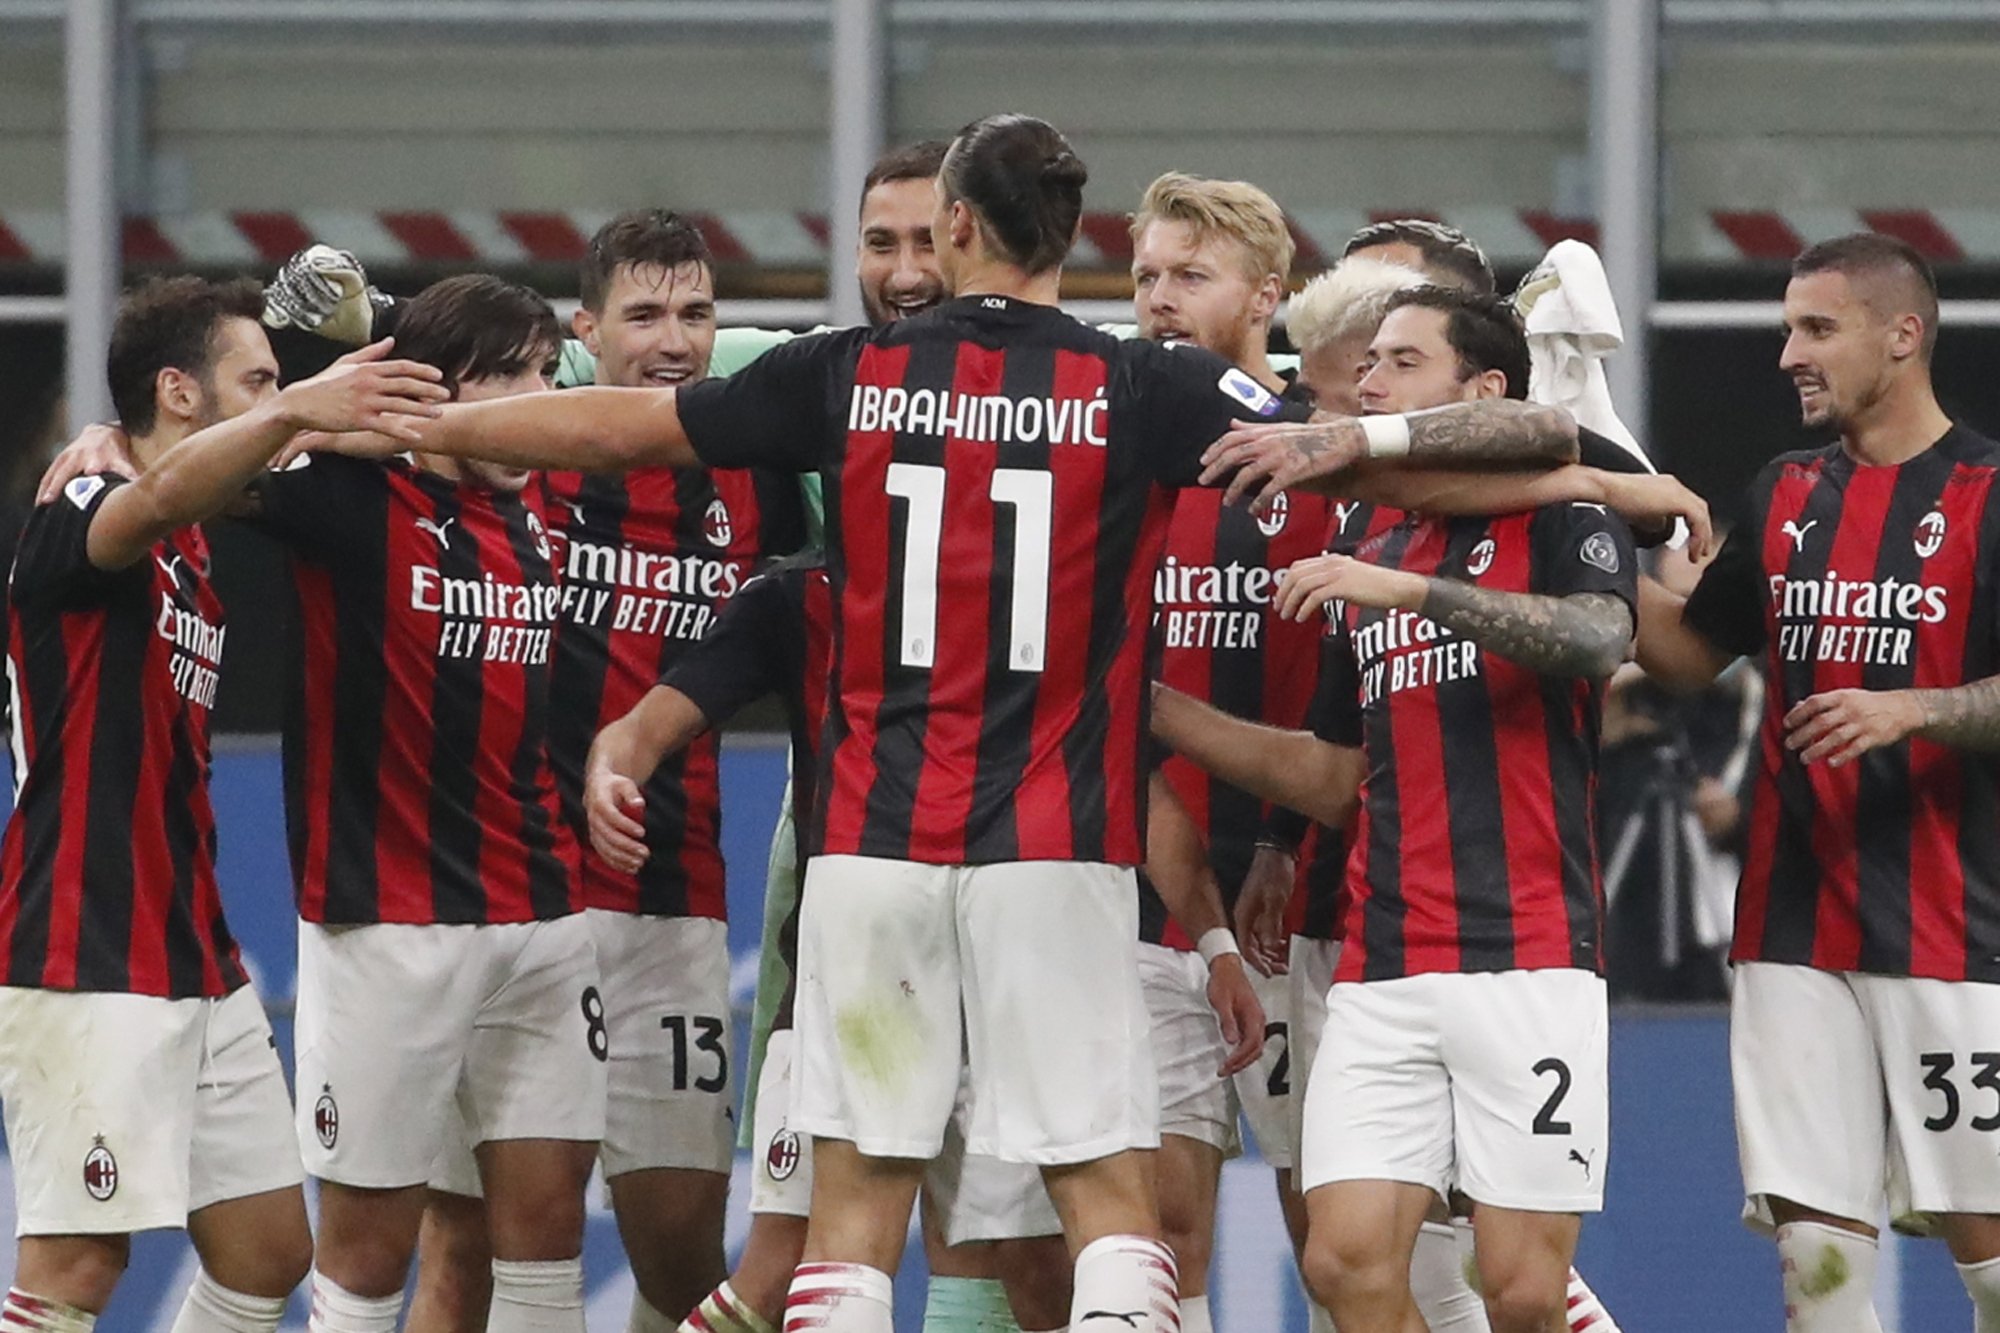 AC Milan executive Gazidis leads revival of Serie A powerhouse | Daily Sabah